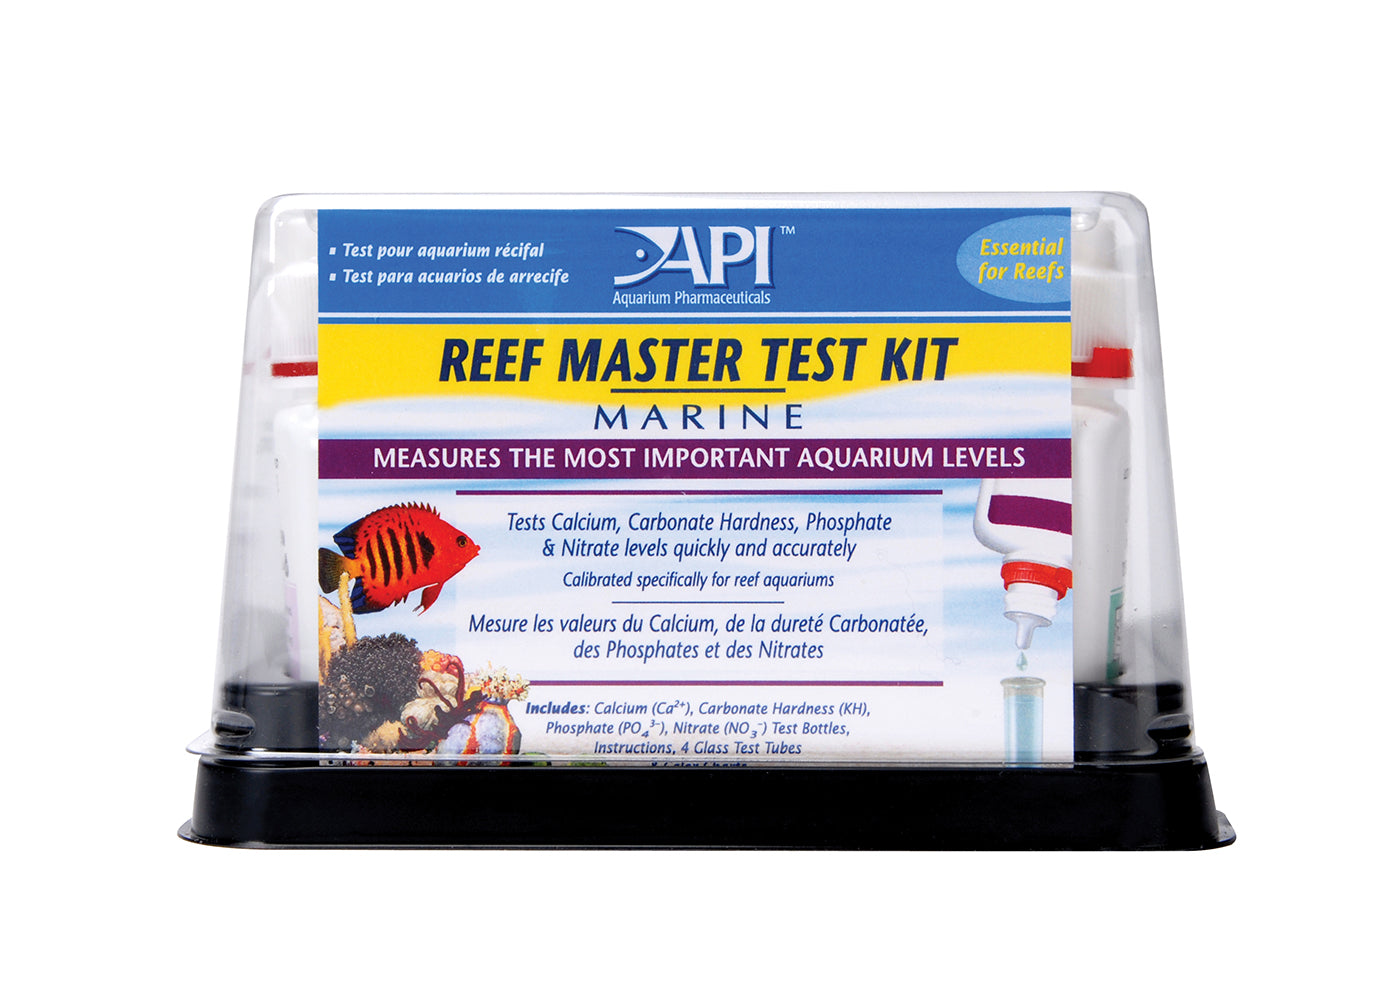 API Reef Master Test Kit, essential for reefs, measures the most important aquarium levels